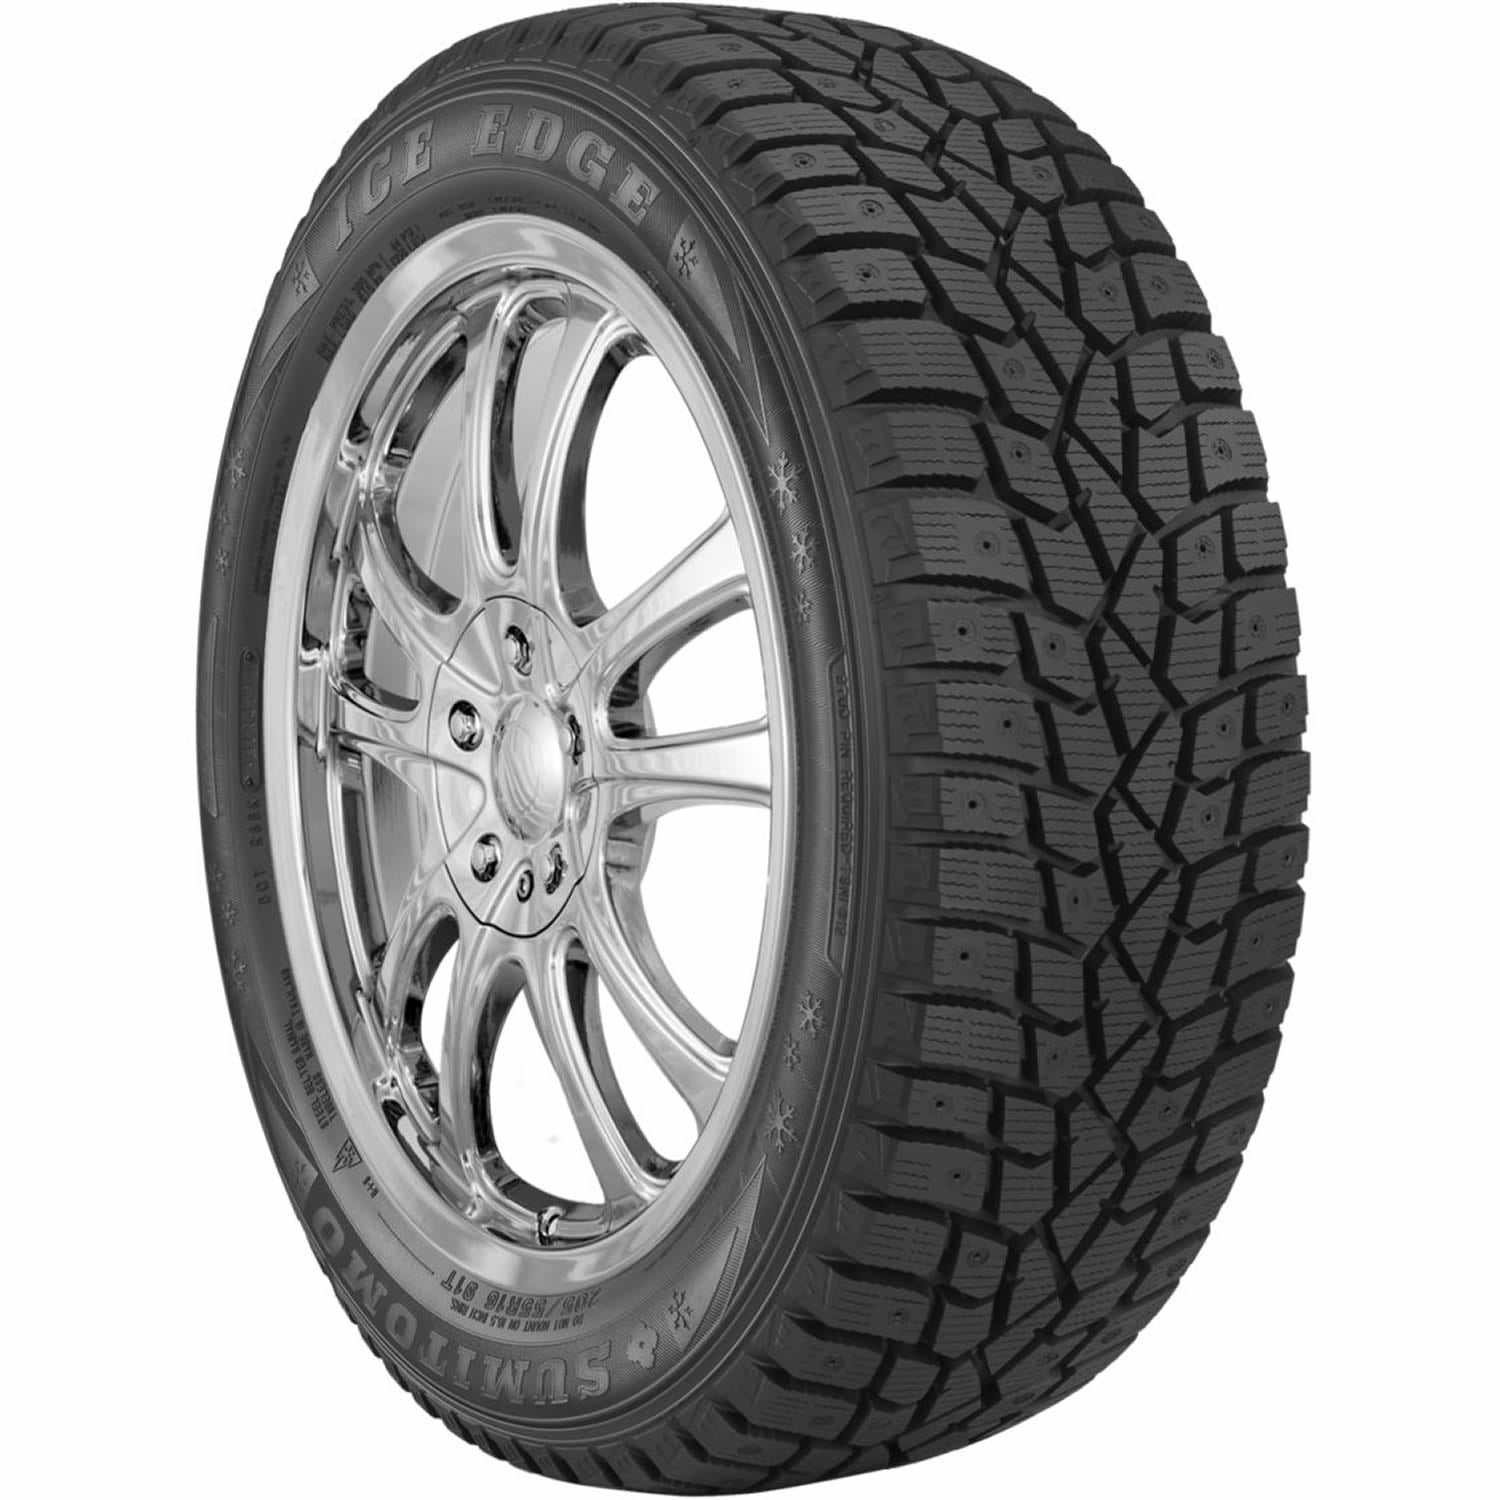 SUMITOMO ICE EDGE 265/60R18 (30.7X10.5R 18) Tires